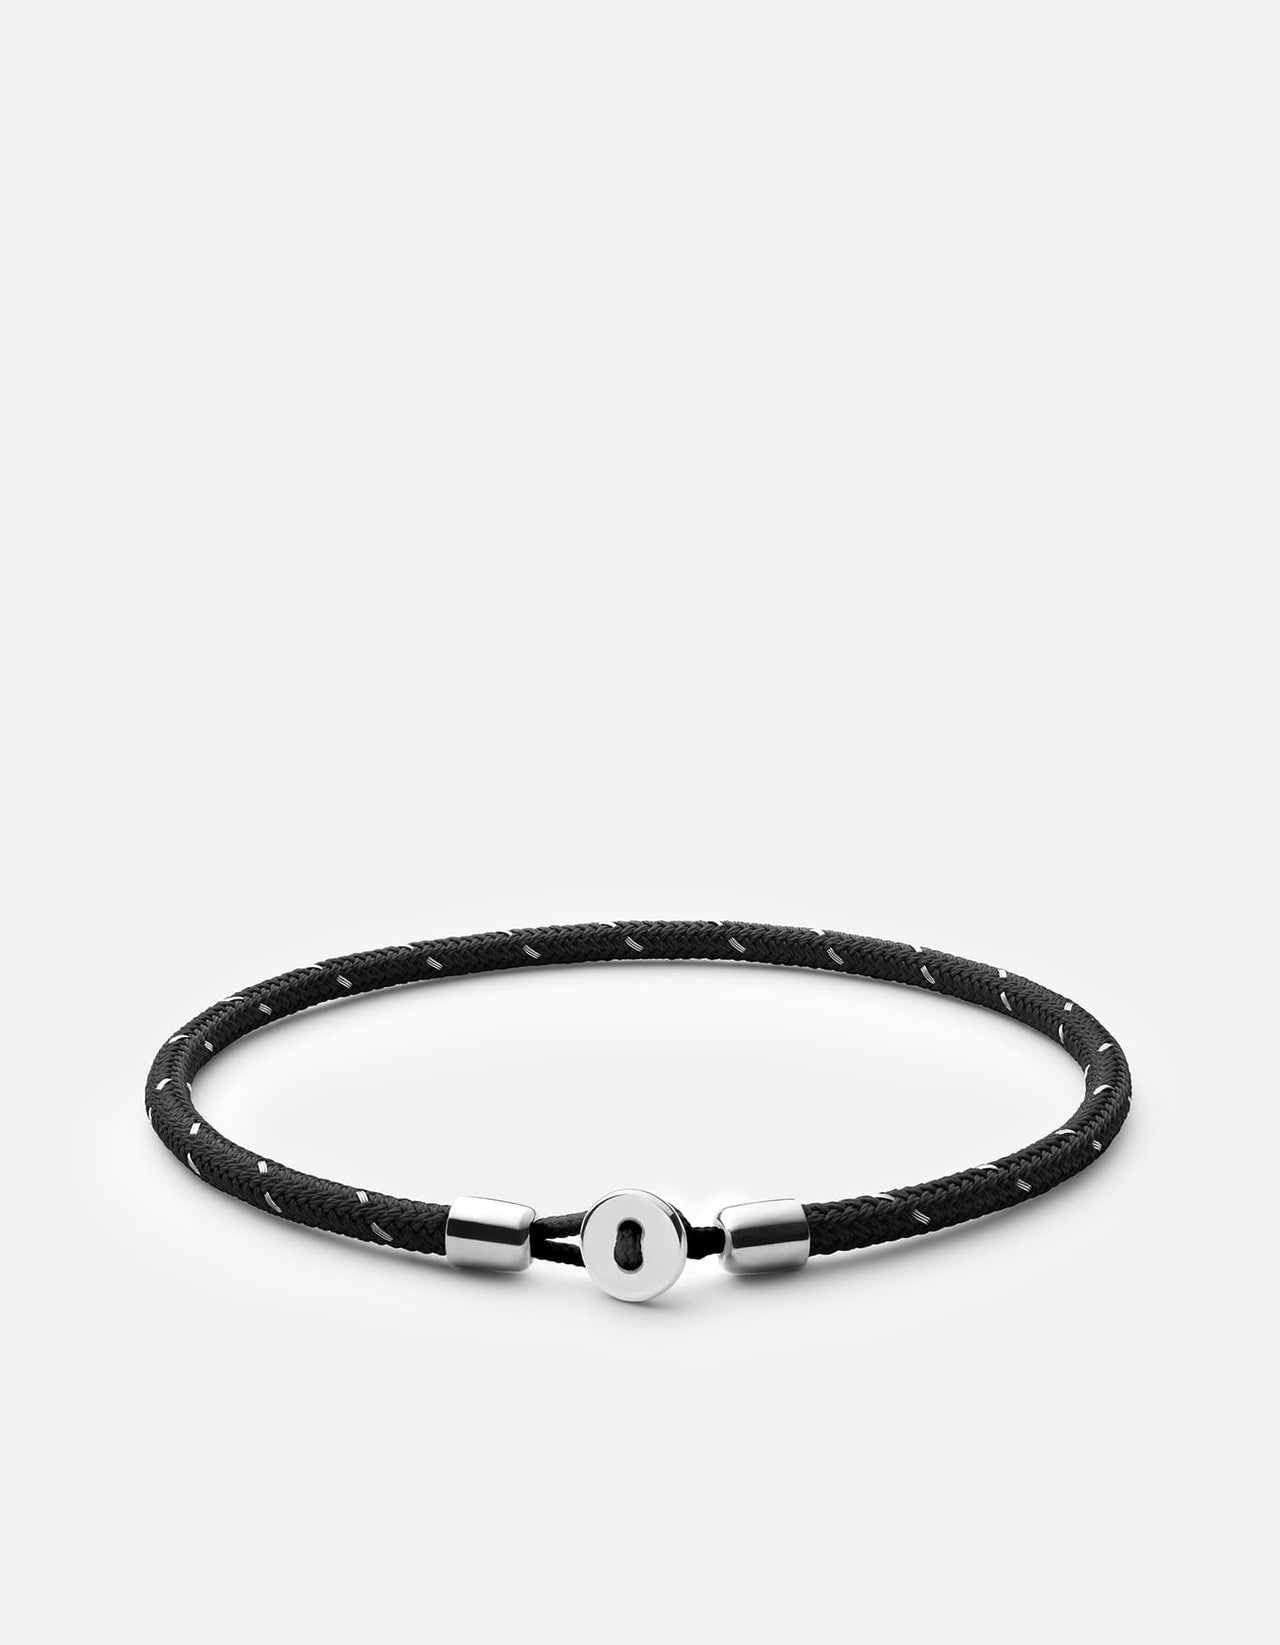 Black & White Distance Bracelets - For Couples | Buddha & Karma